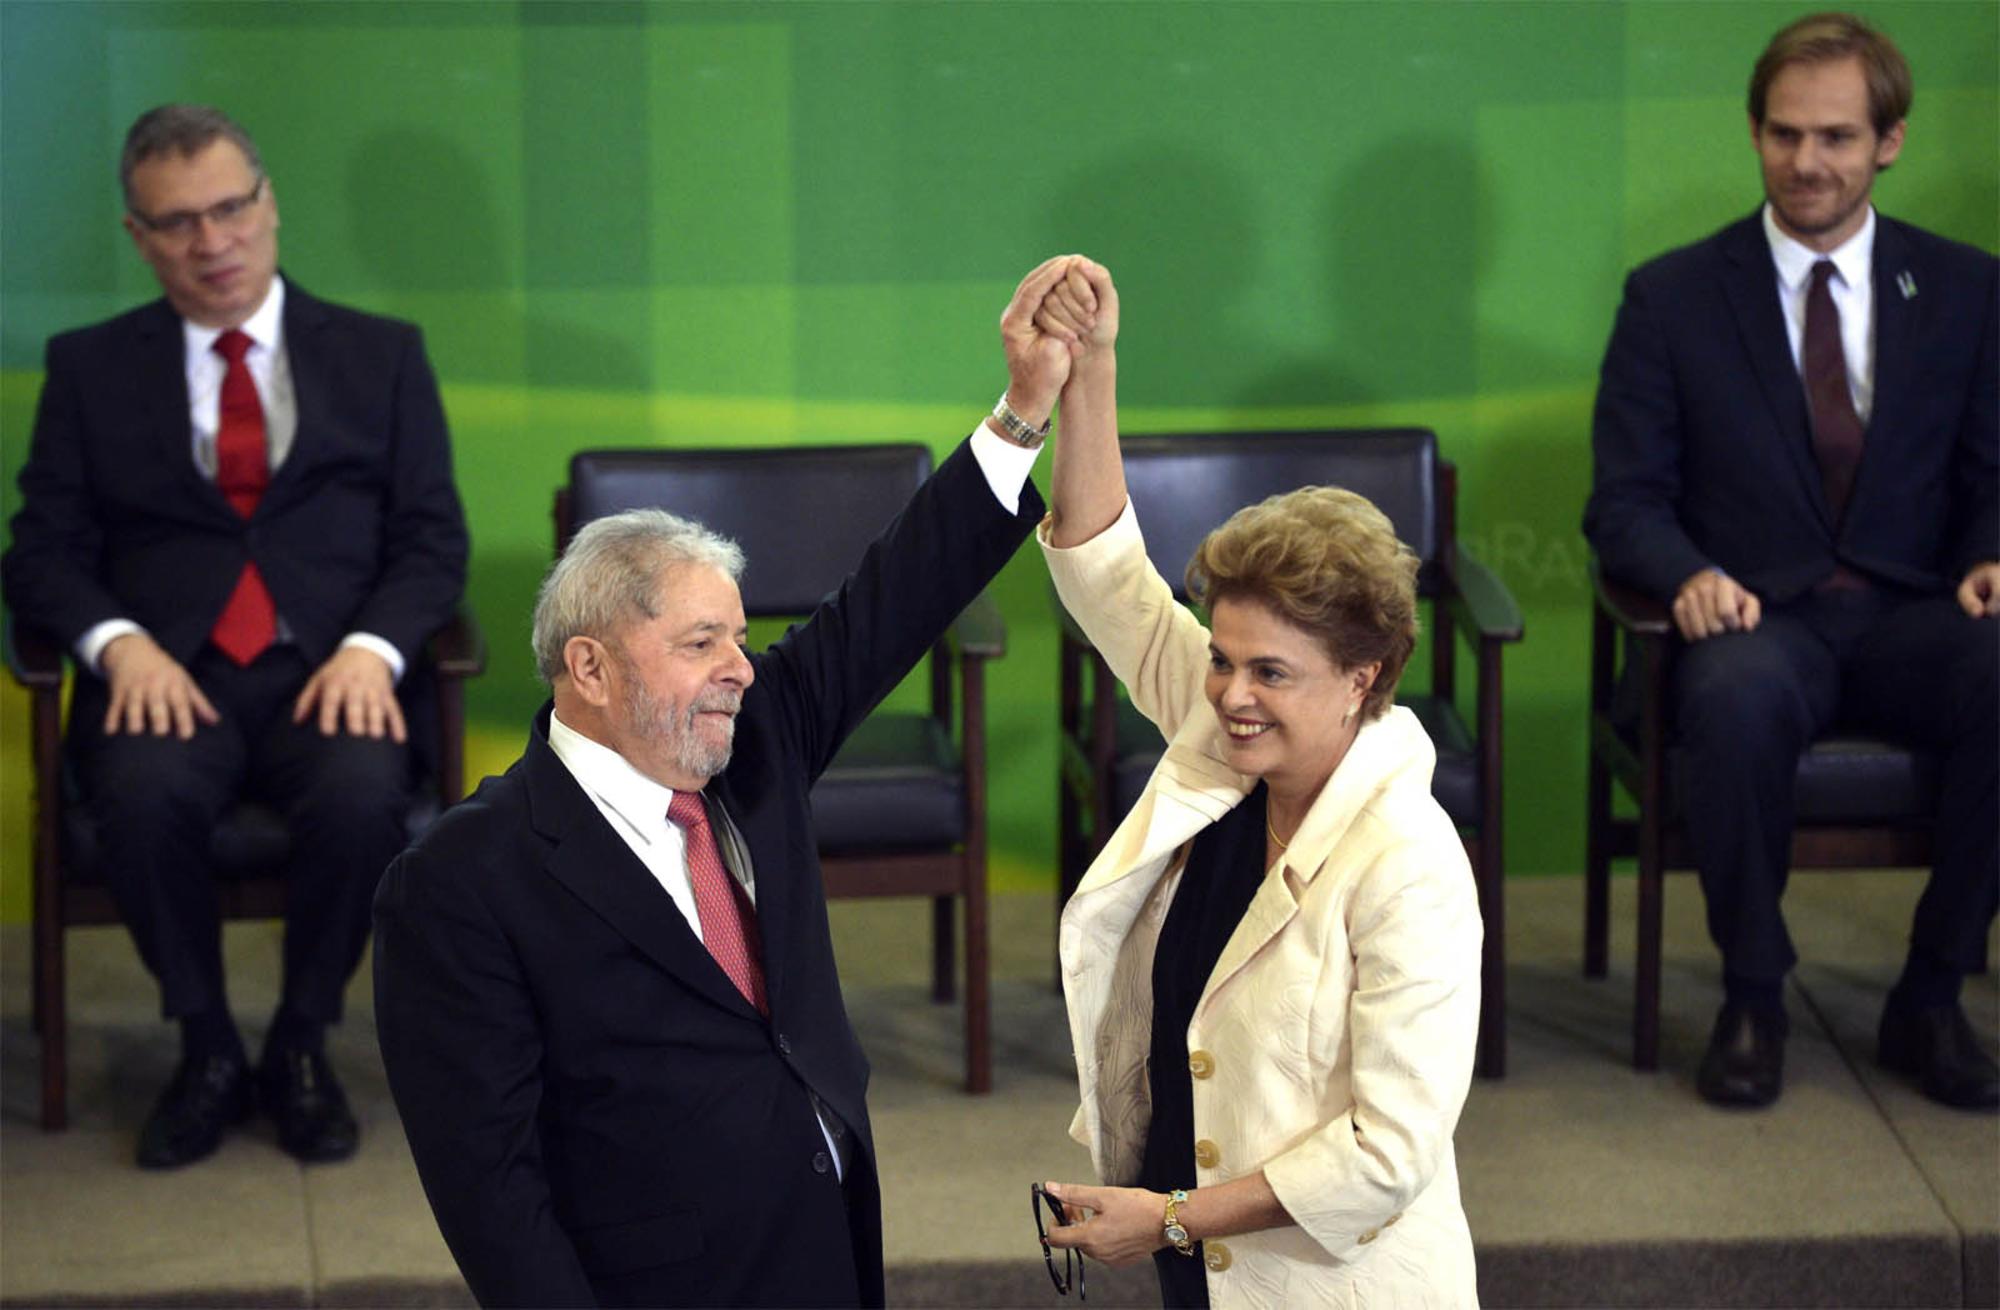 Lula y Dilma Roussef